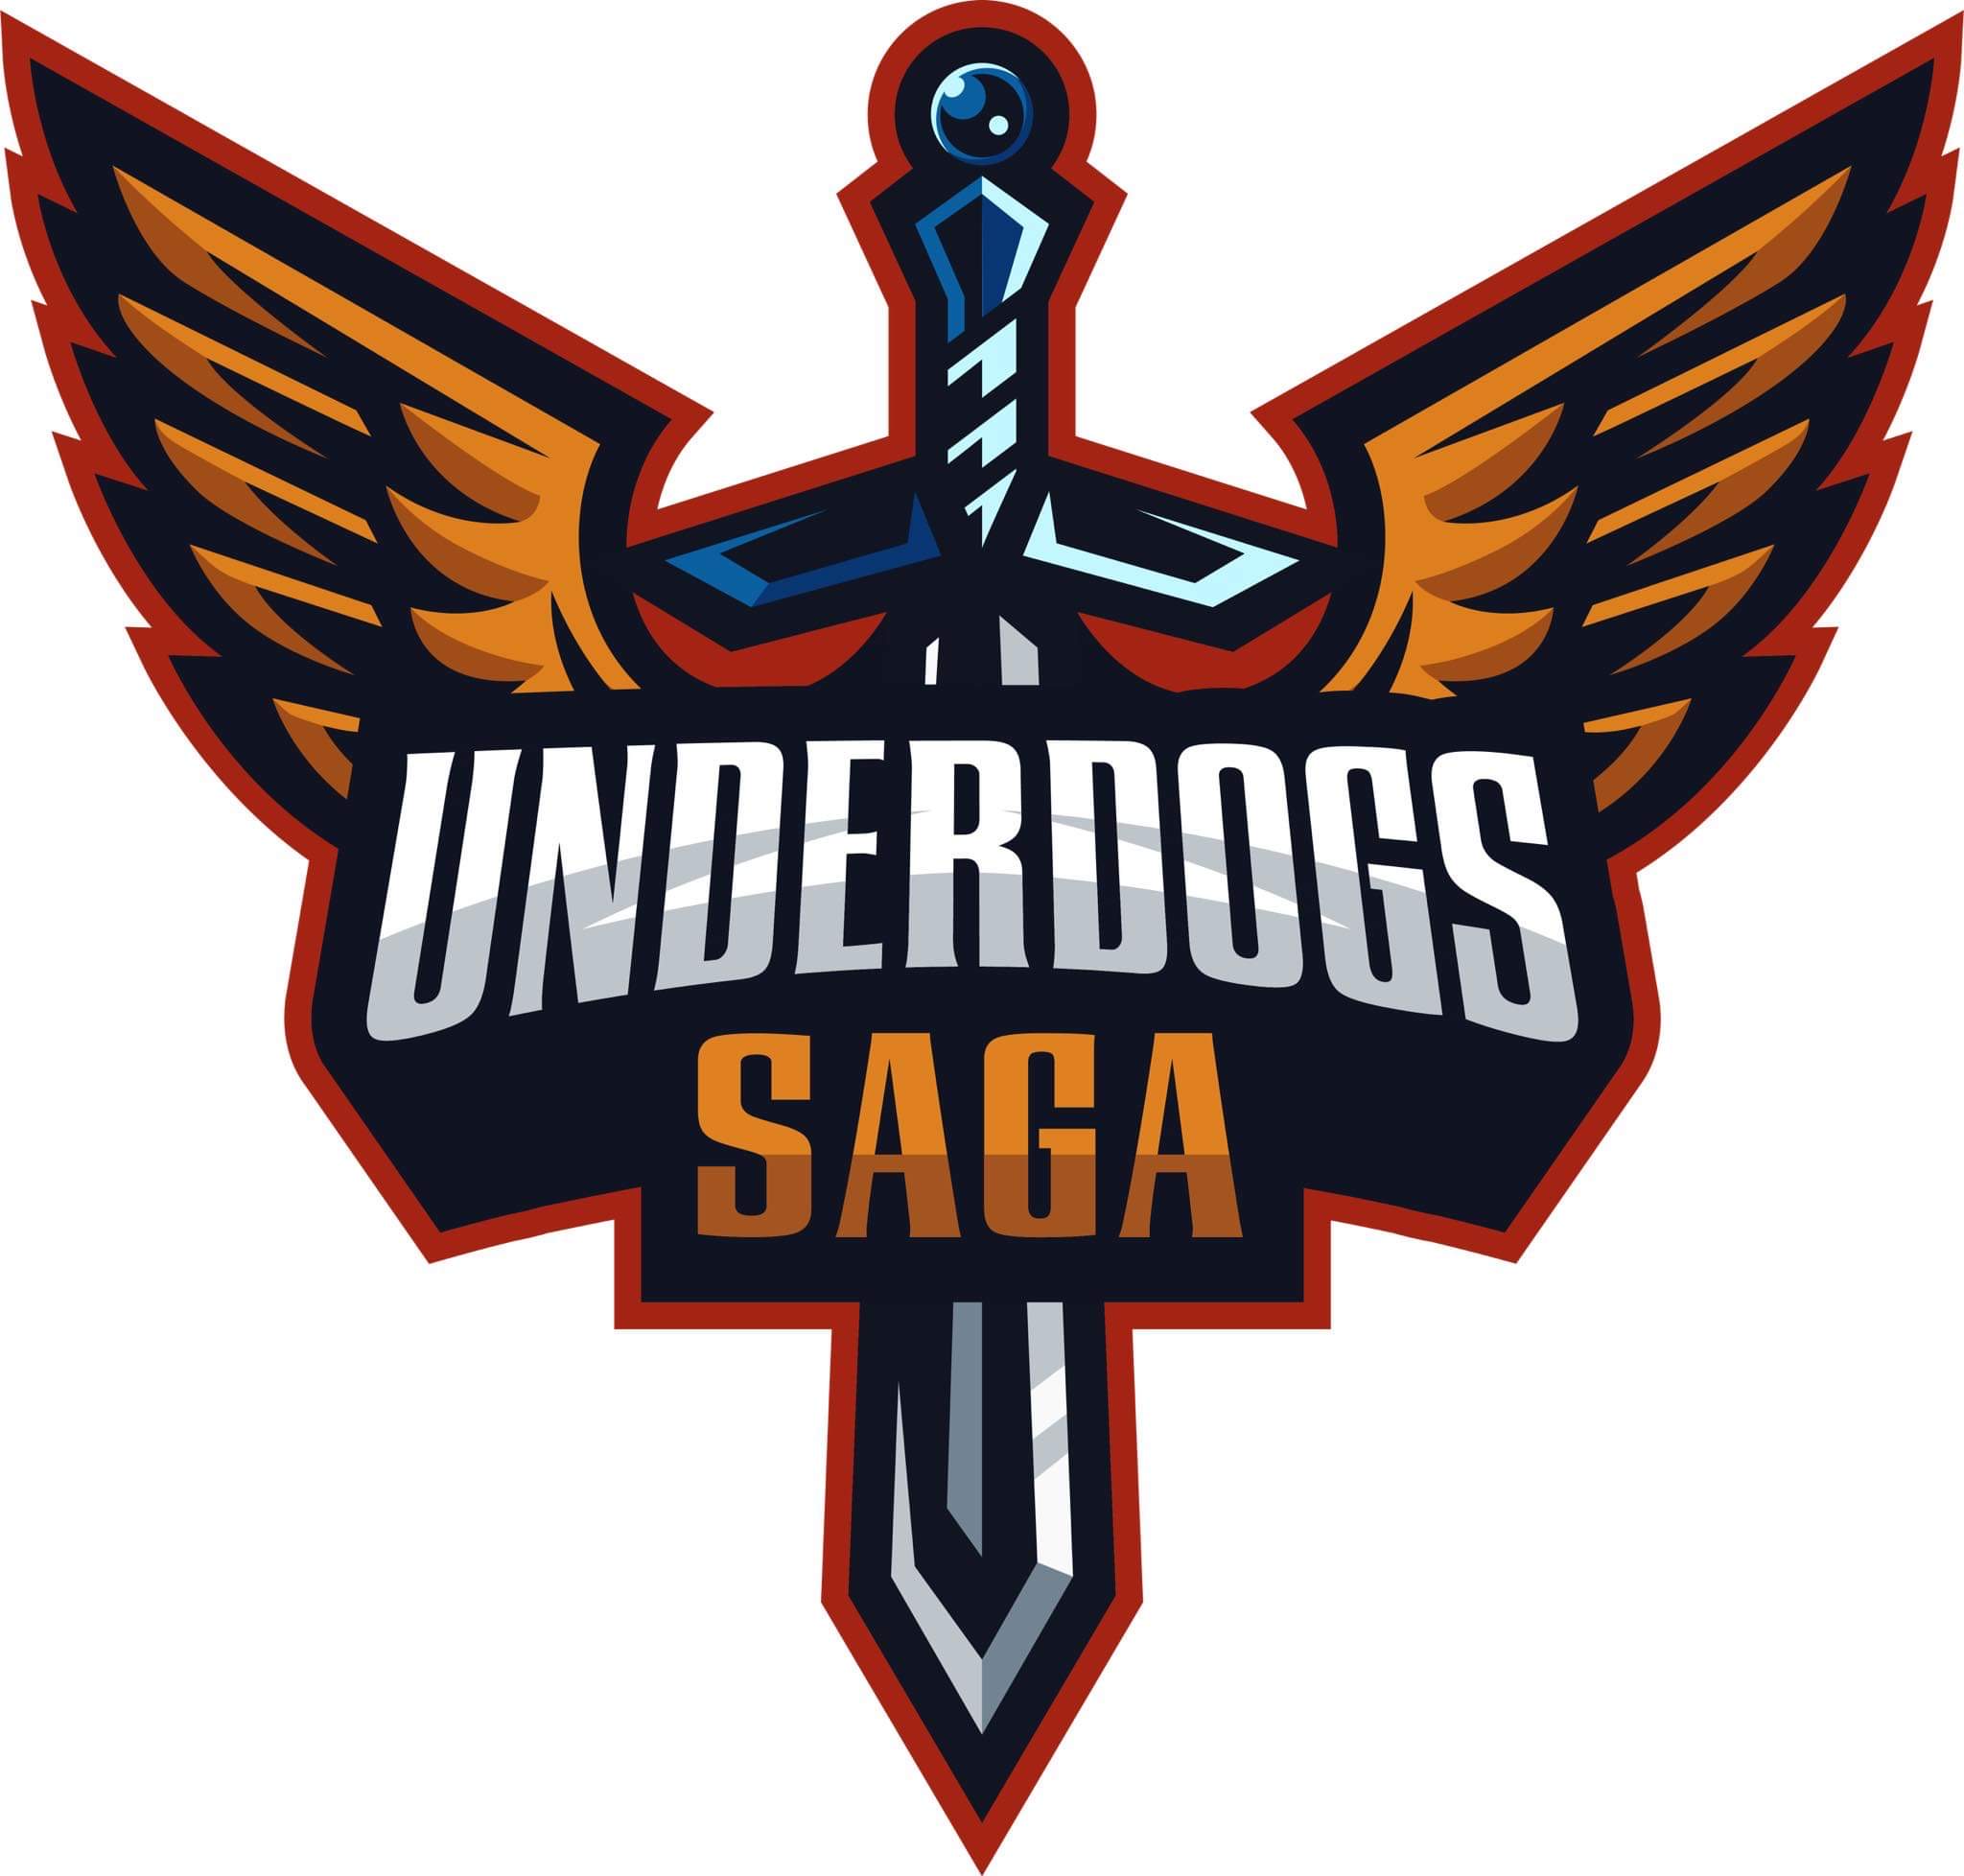 Underdogs saga